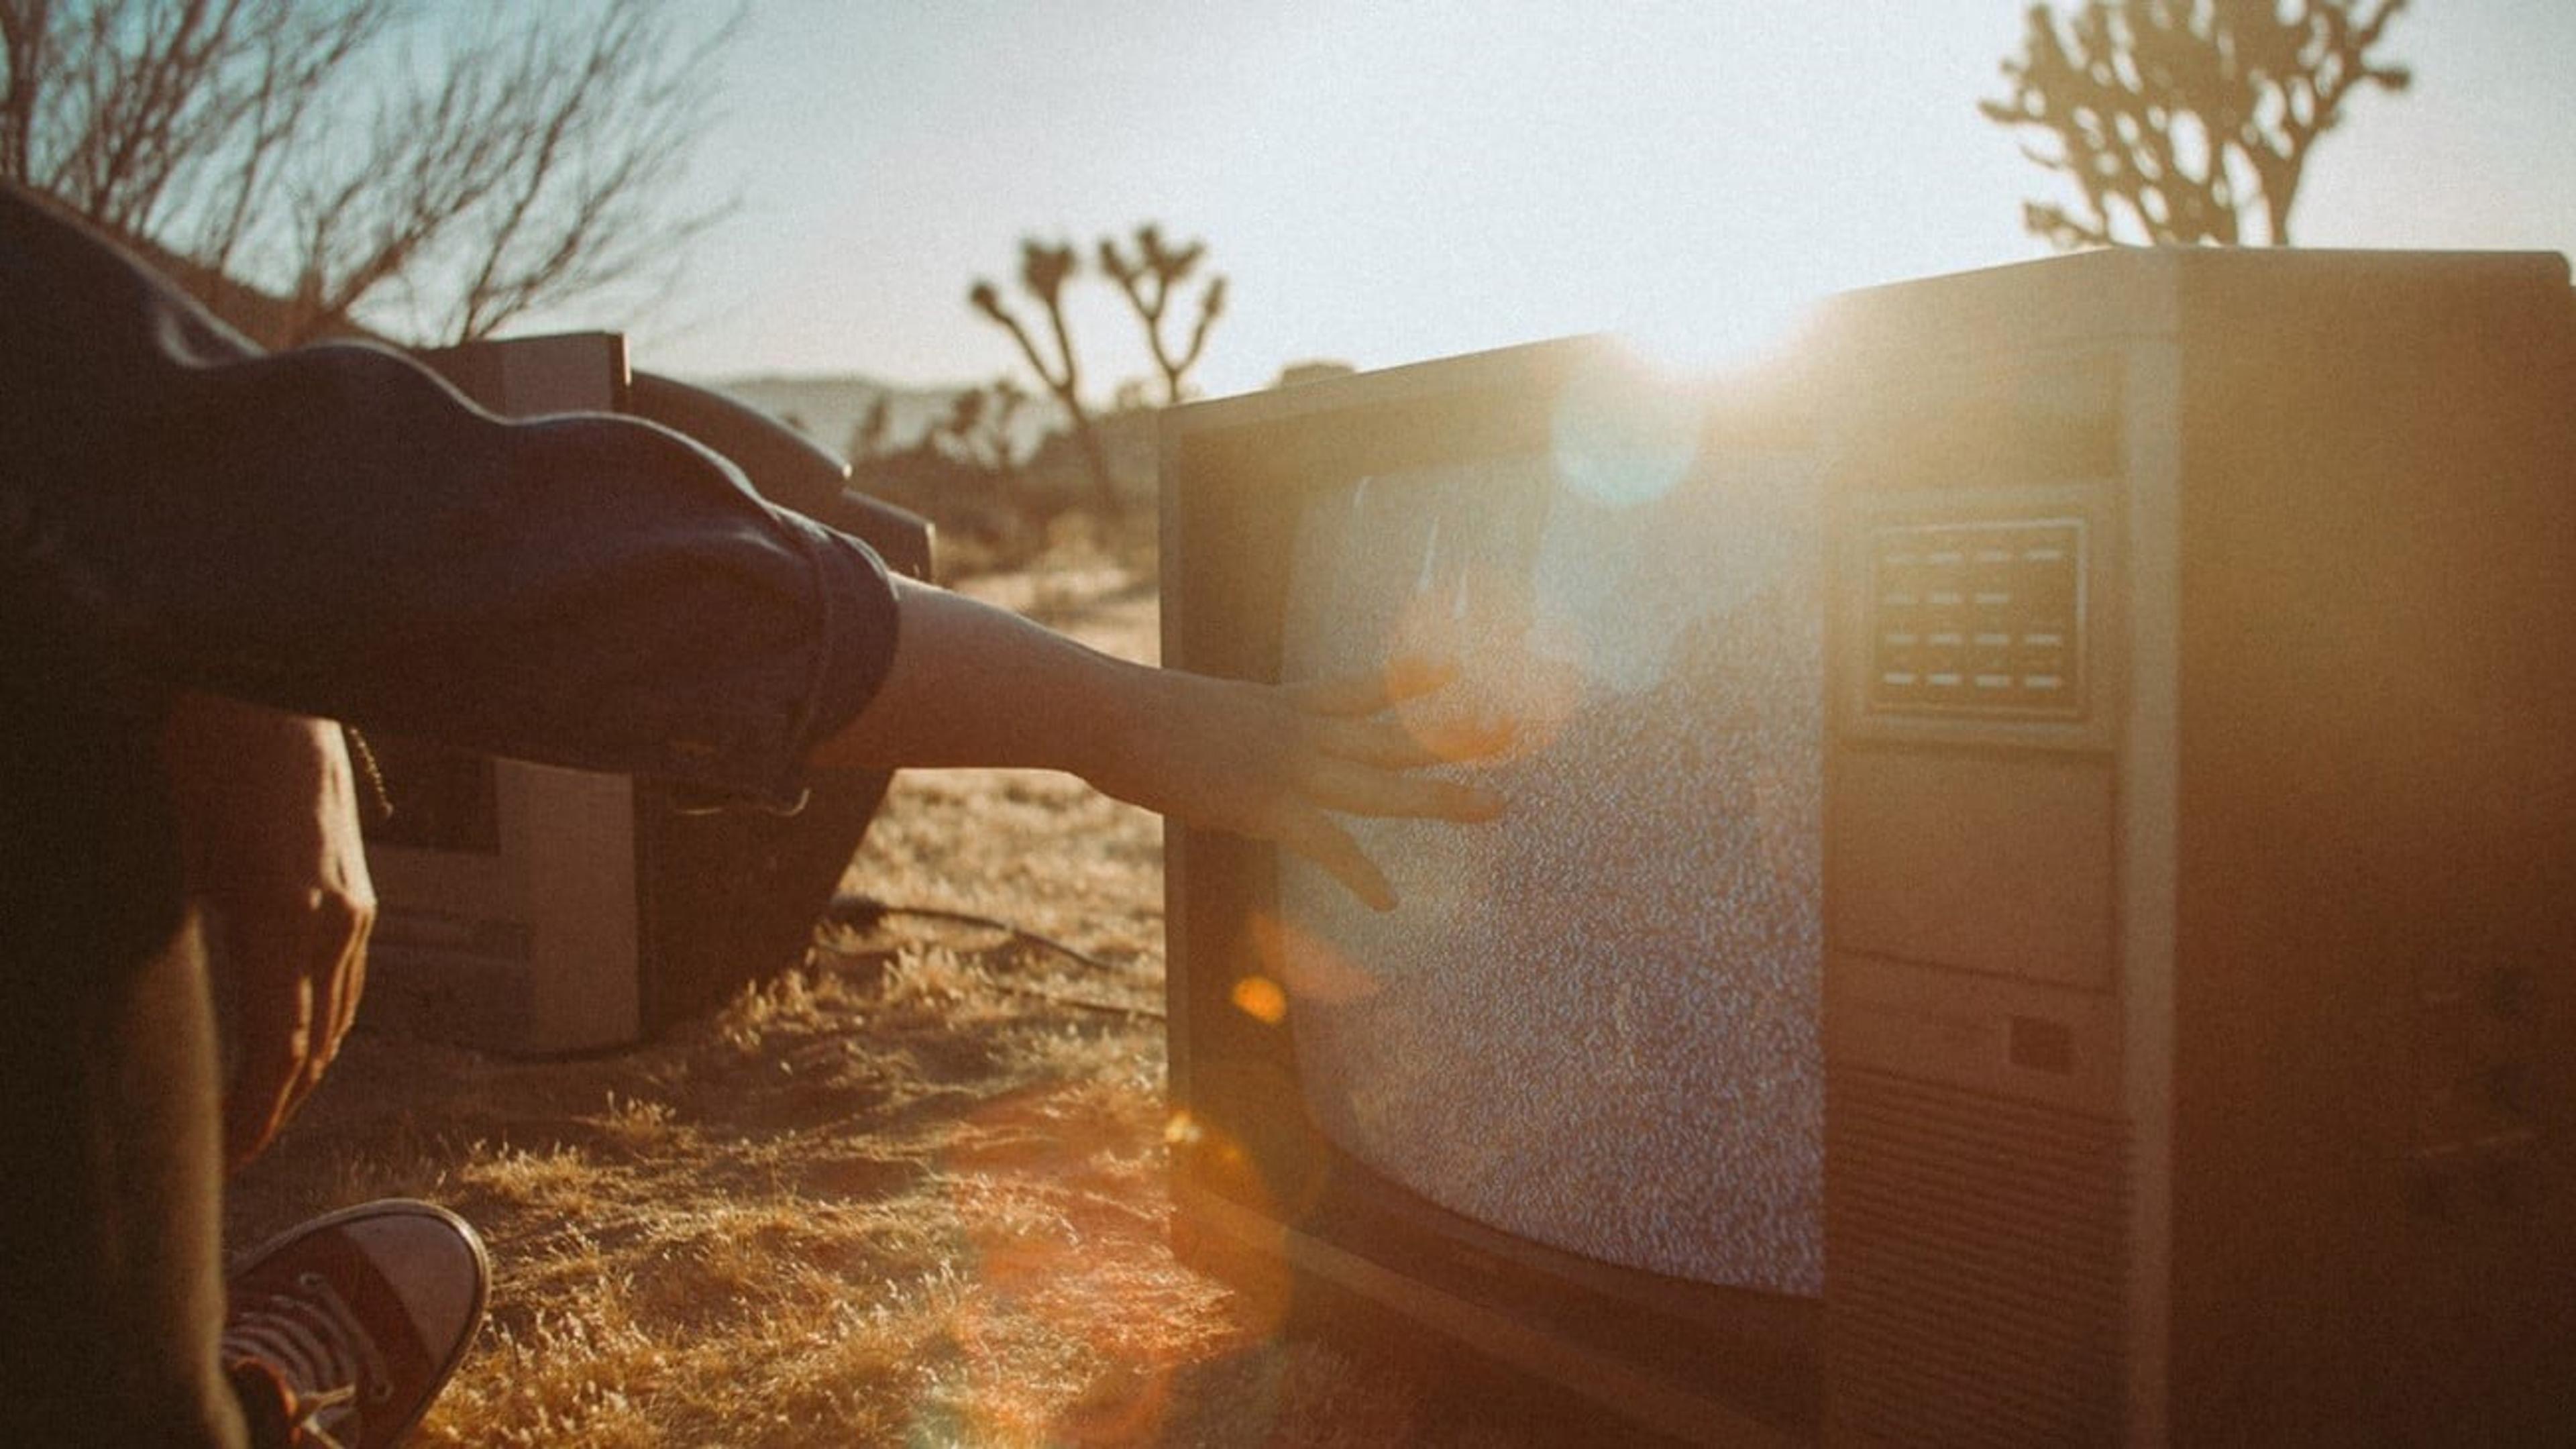 Menneske som ser på gammel TV i ørkenen